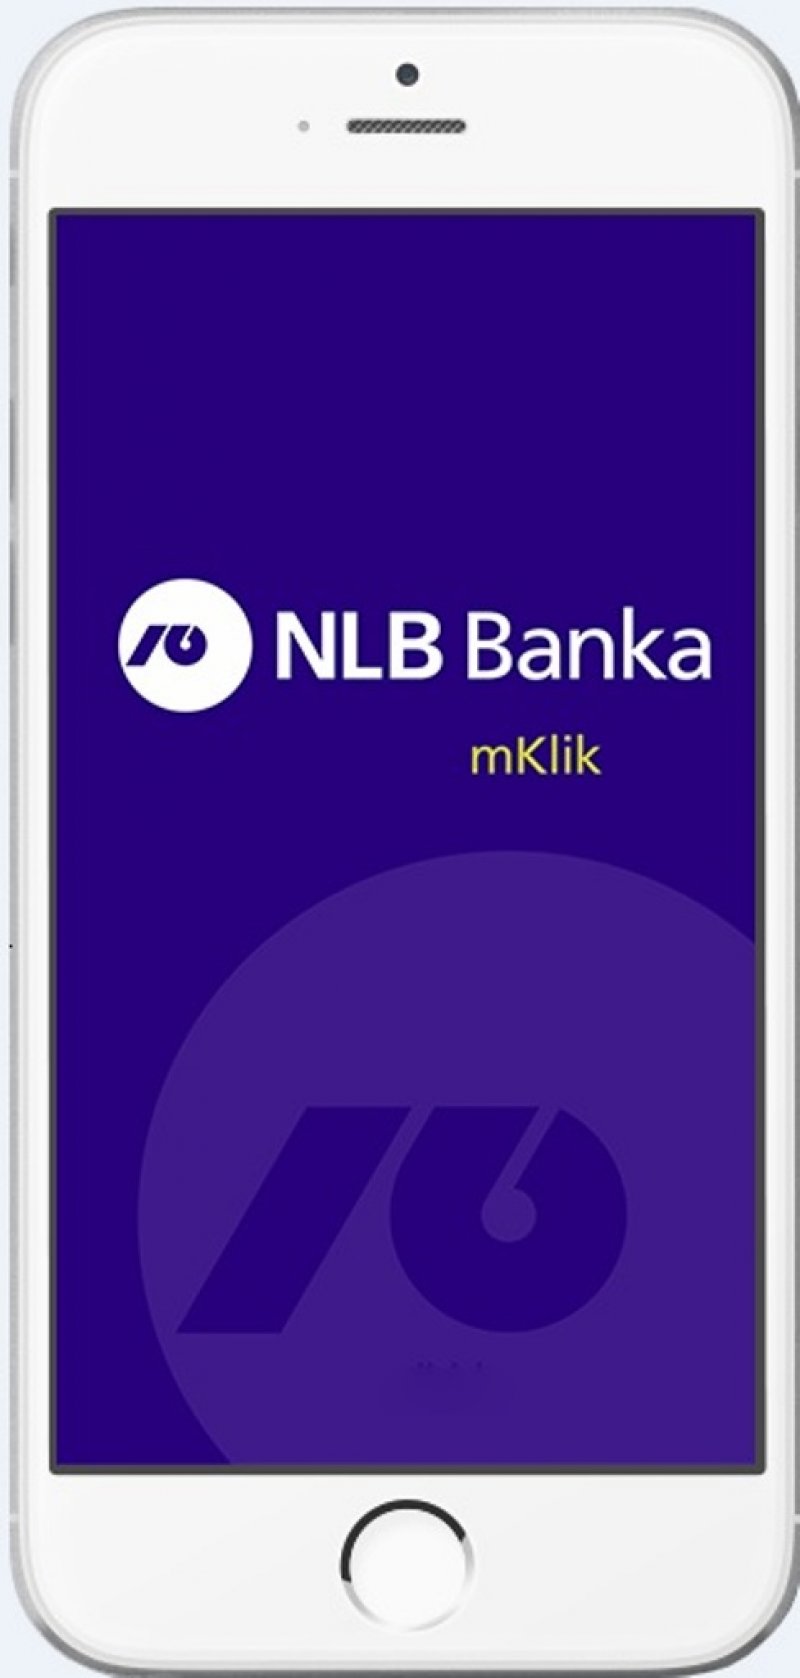 nlb-banka-mklik